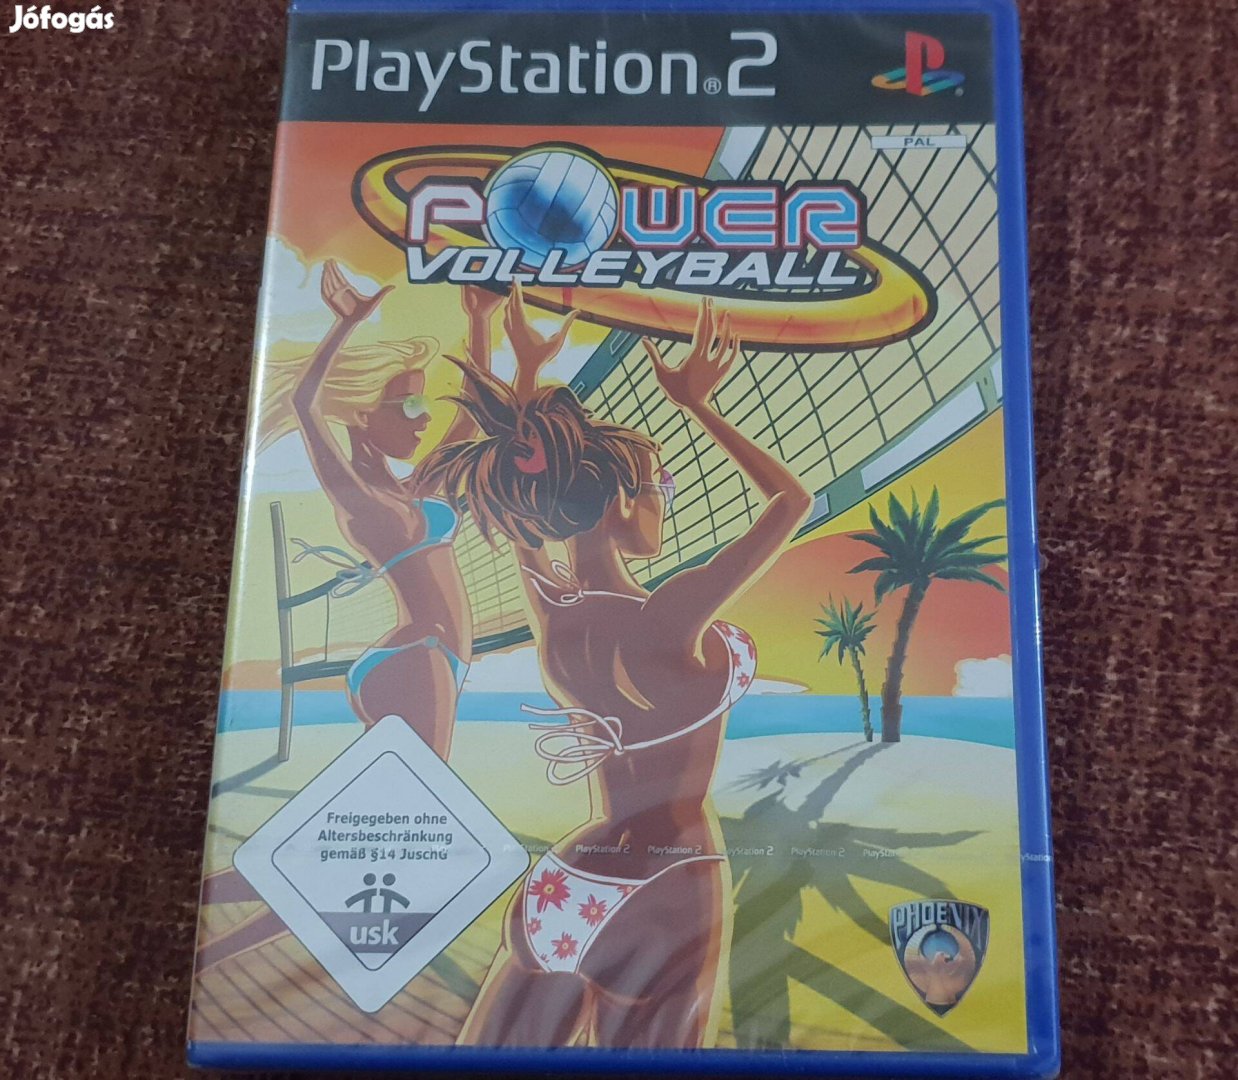 Power Volleyball Playstation 2 eredeti lemez ( 2500 Ft )